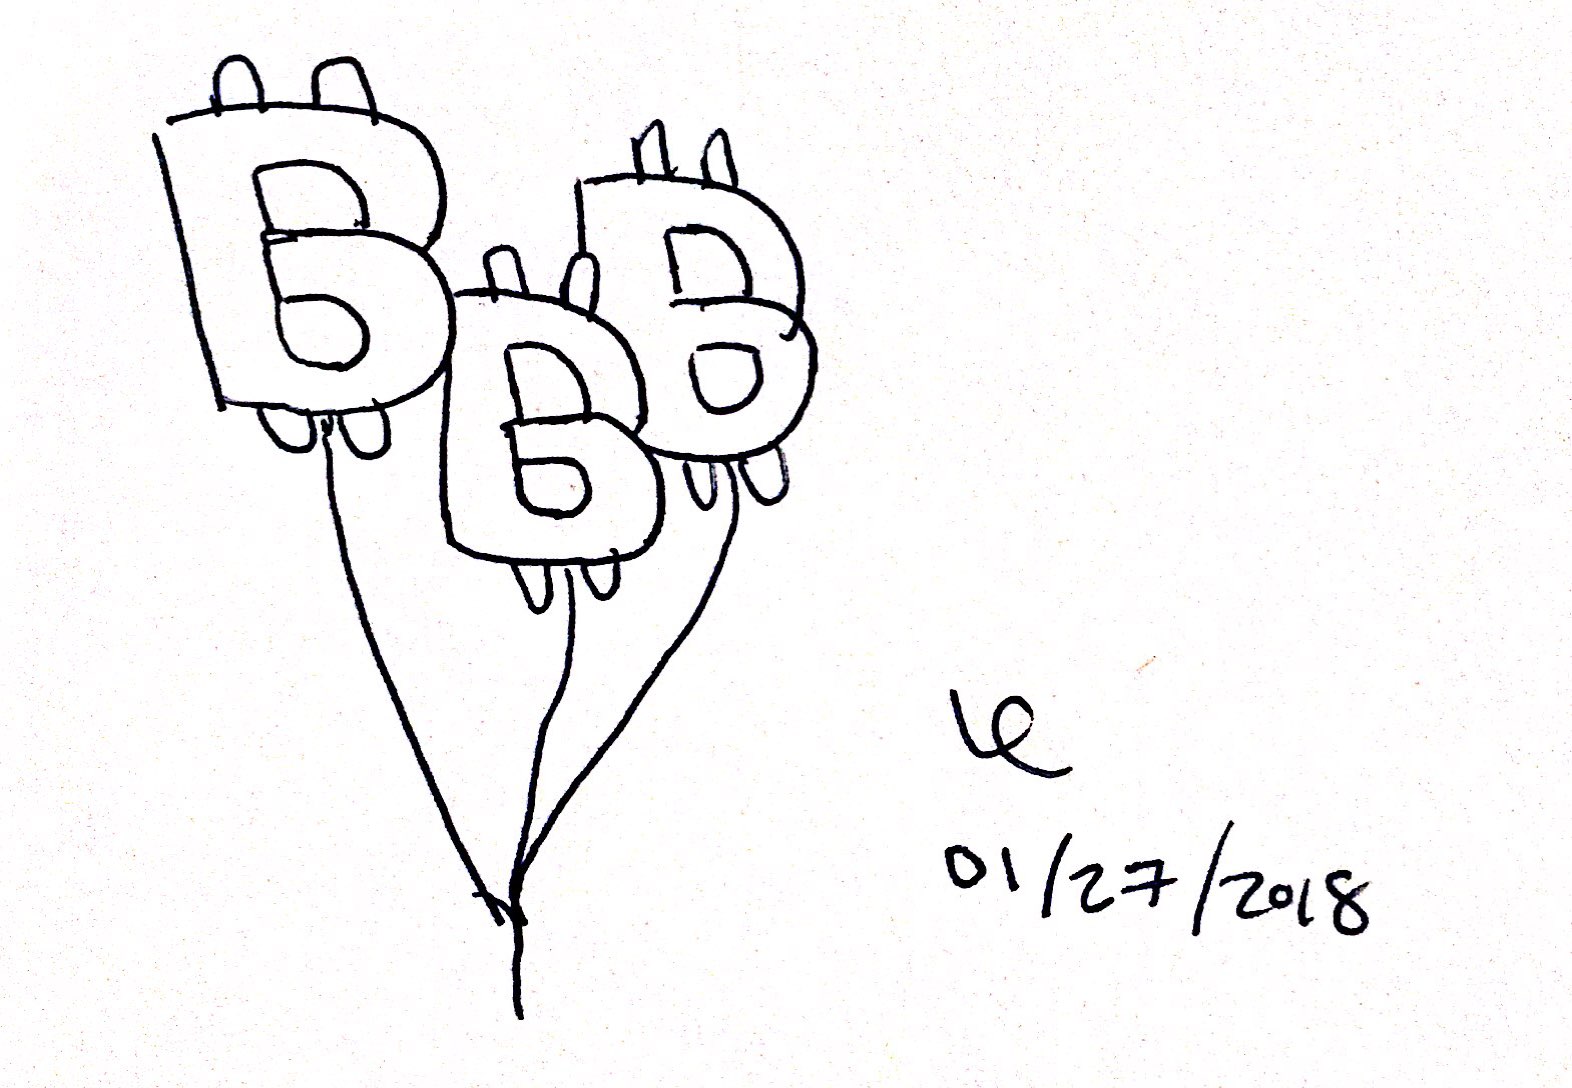 sketch of balloons shaped like Bitcoin logo